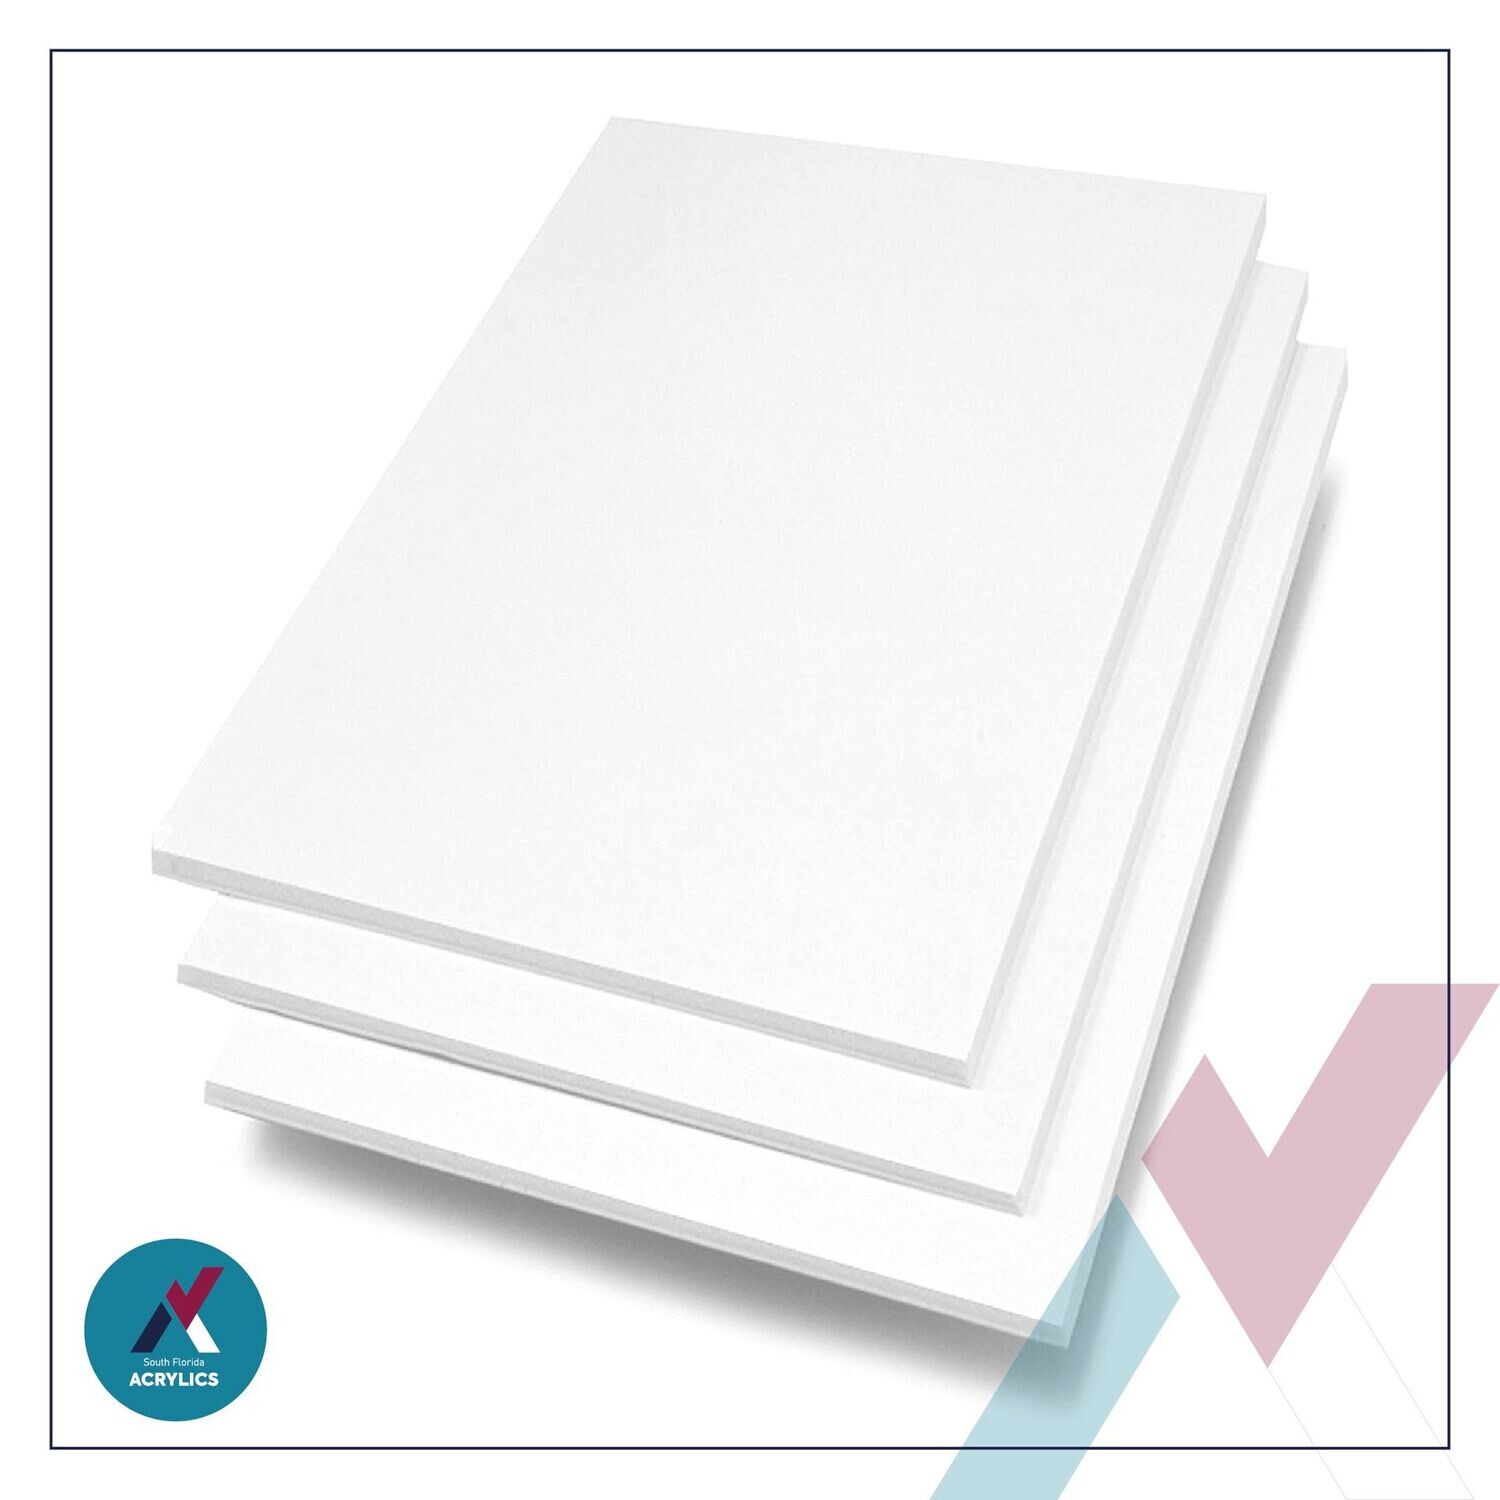 4' x 8' x 1/8Opaque White Acrylic Sheet 2 sides Glossy, Plexiglas